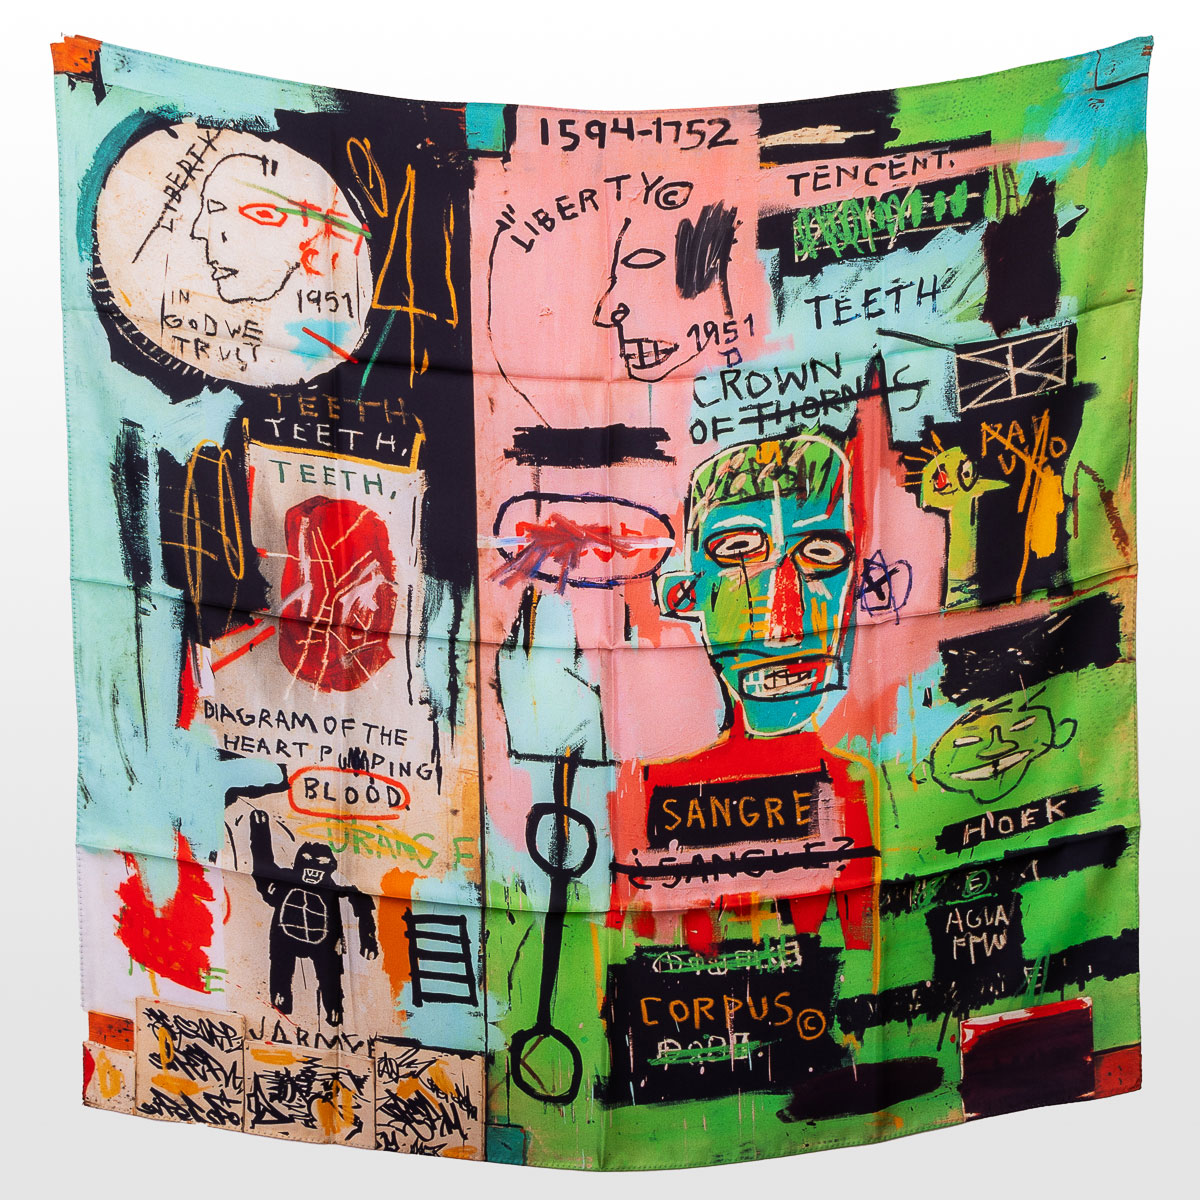 Basquiat silk square Scarf - In Italian (unfolded)